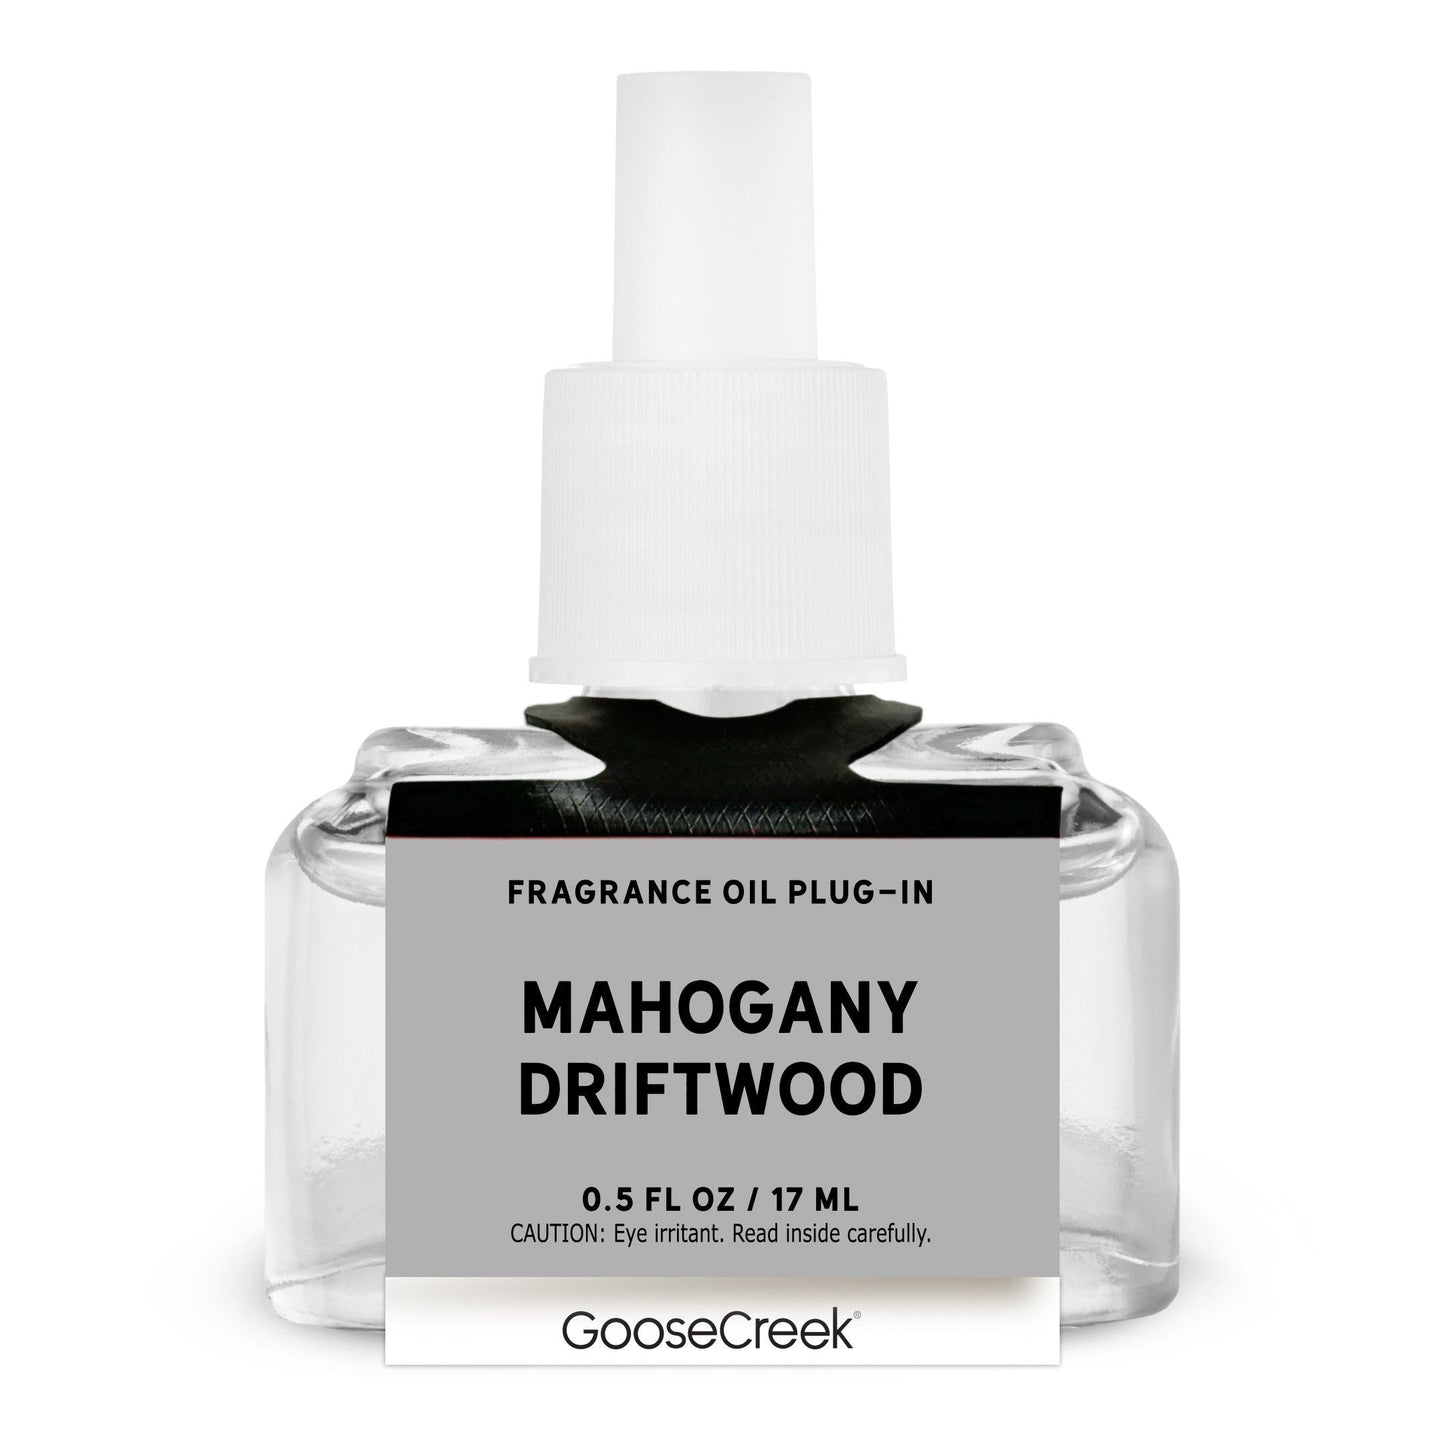 Mahogany Teakwood Wax Melts - Sweet C's Scents